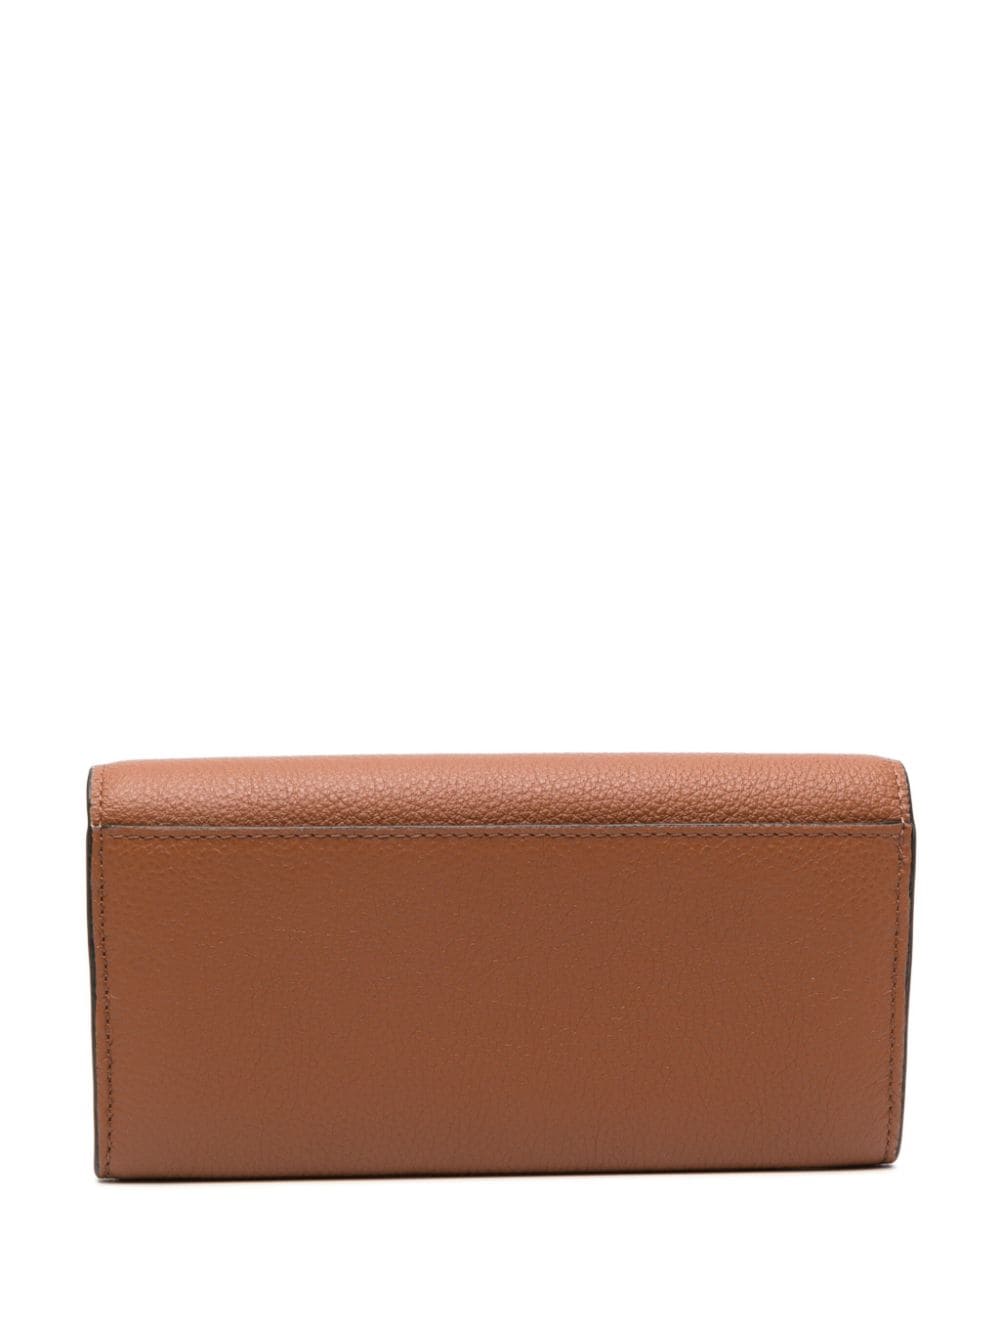 Chloé logo-plaque leather wallet - Bruin